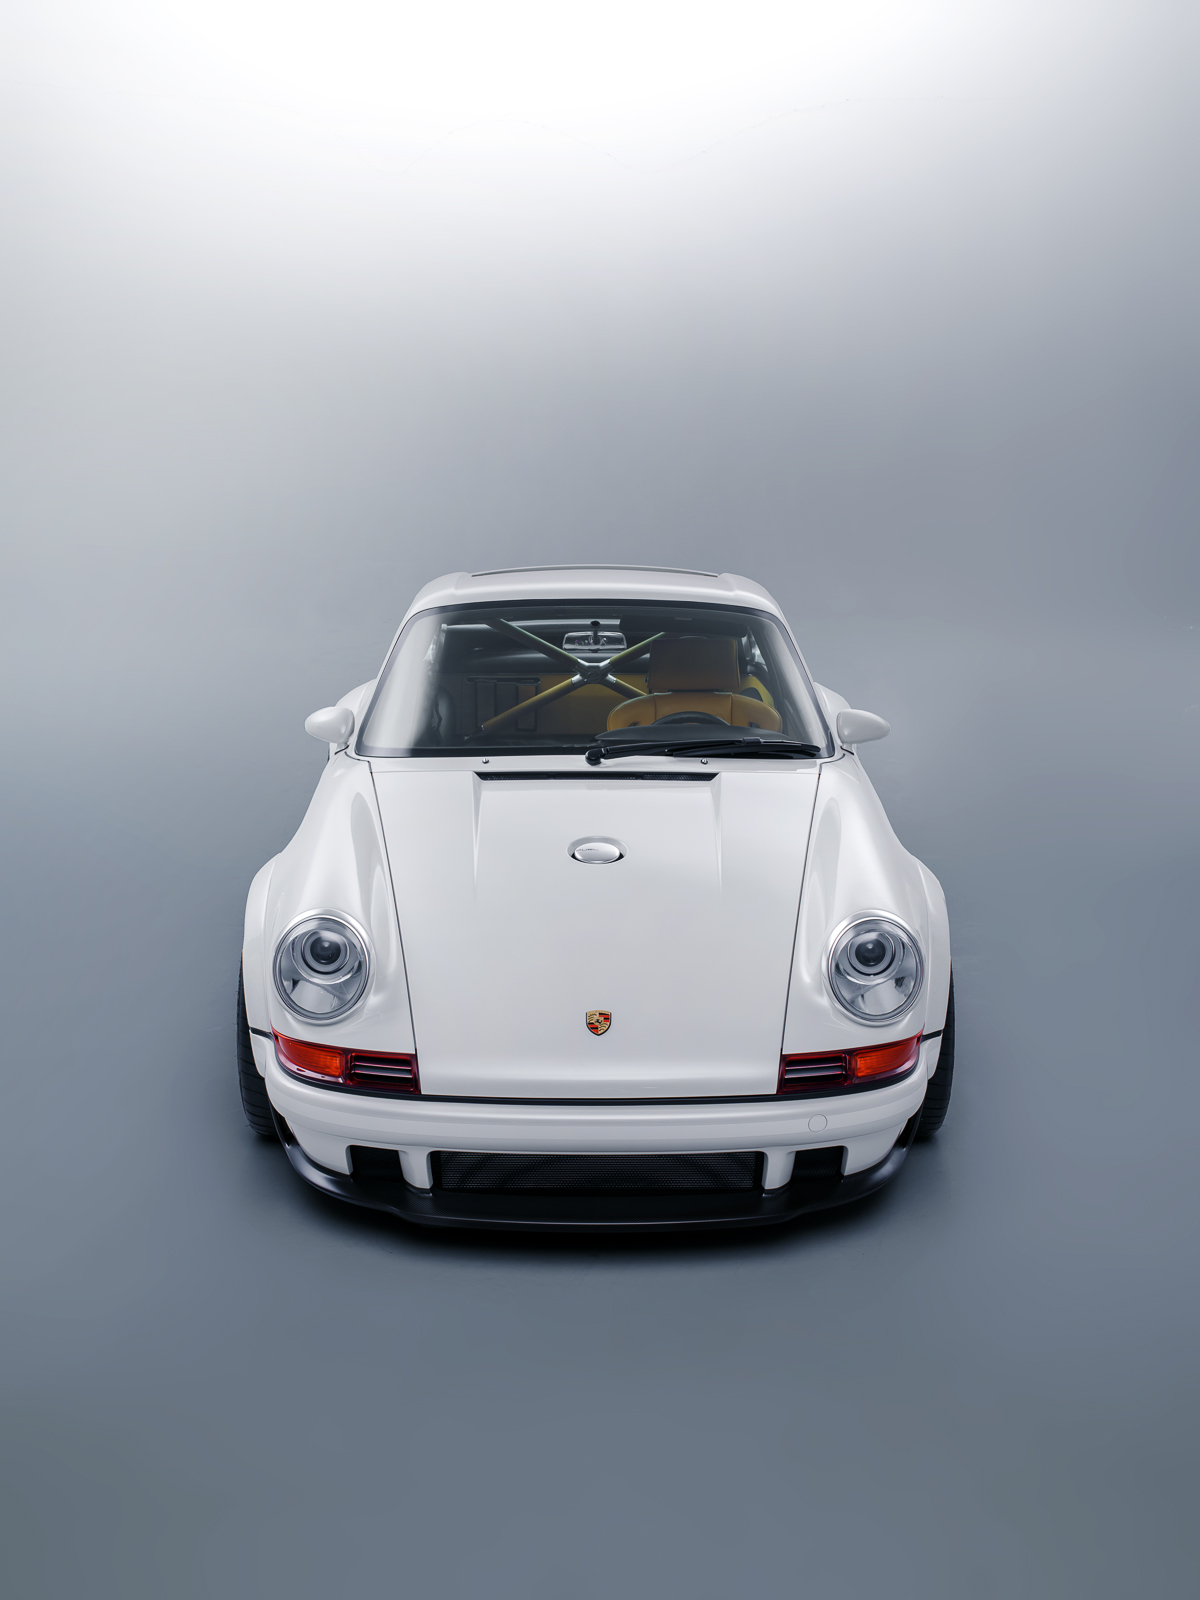 Porsche 911 Dls Wallpapers